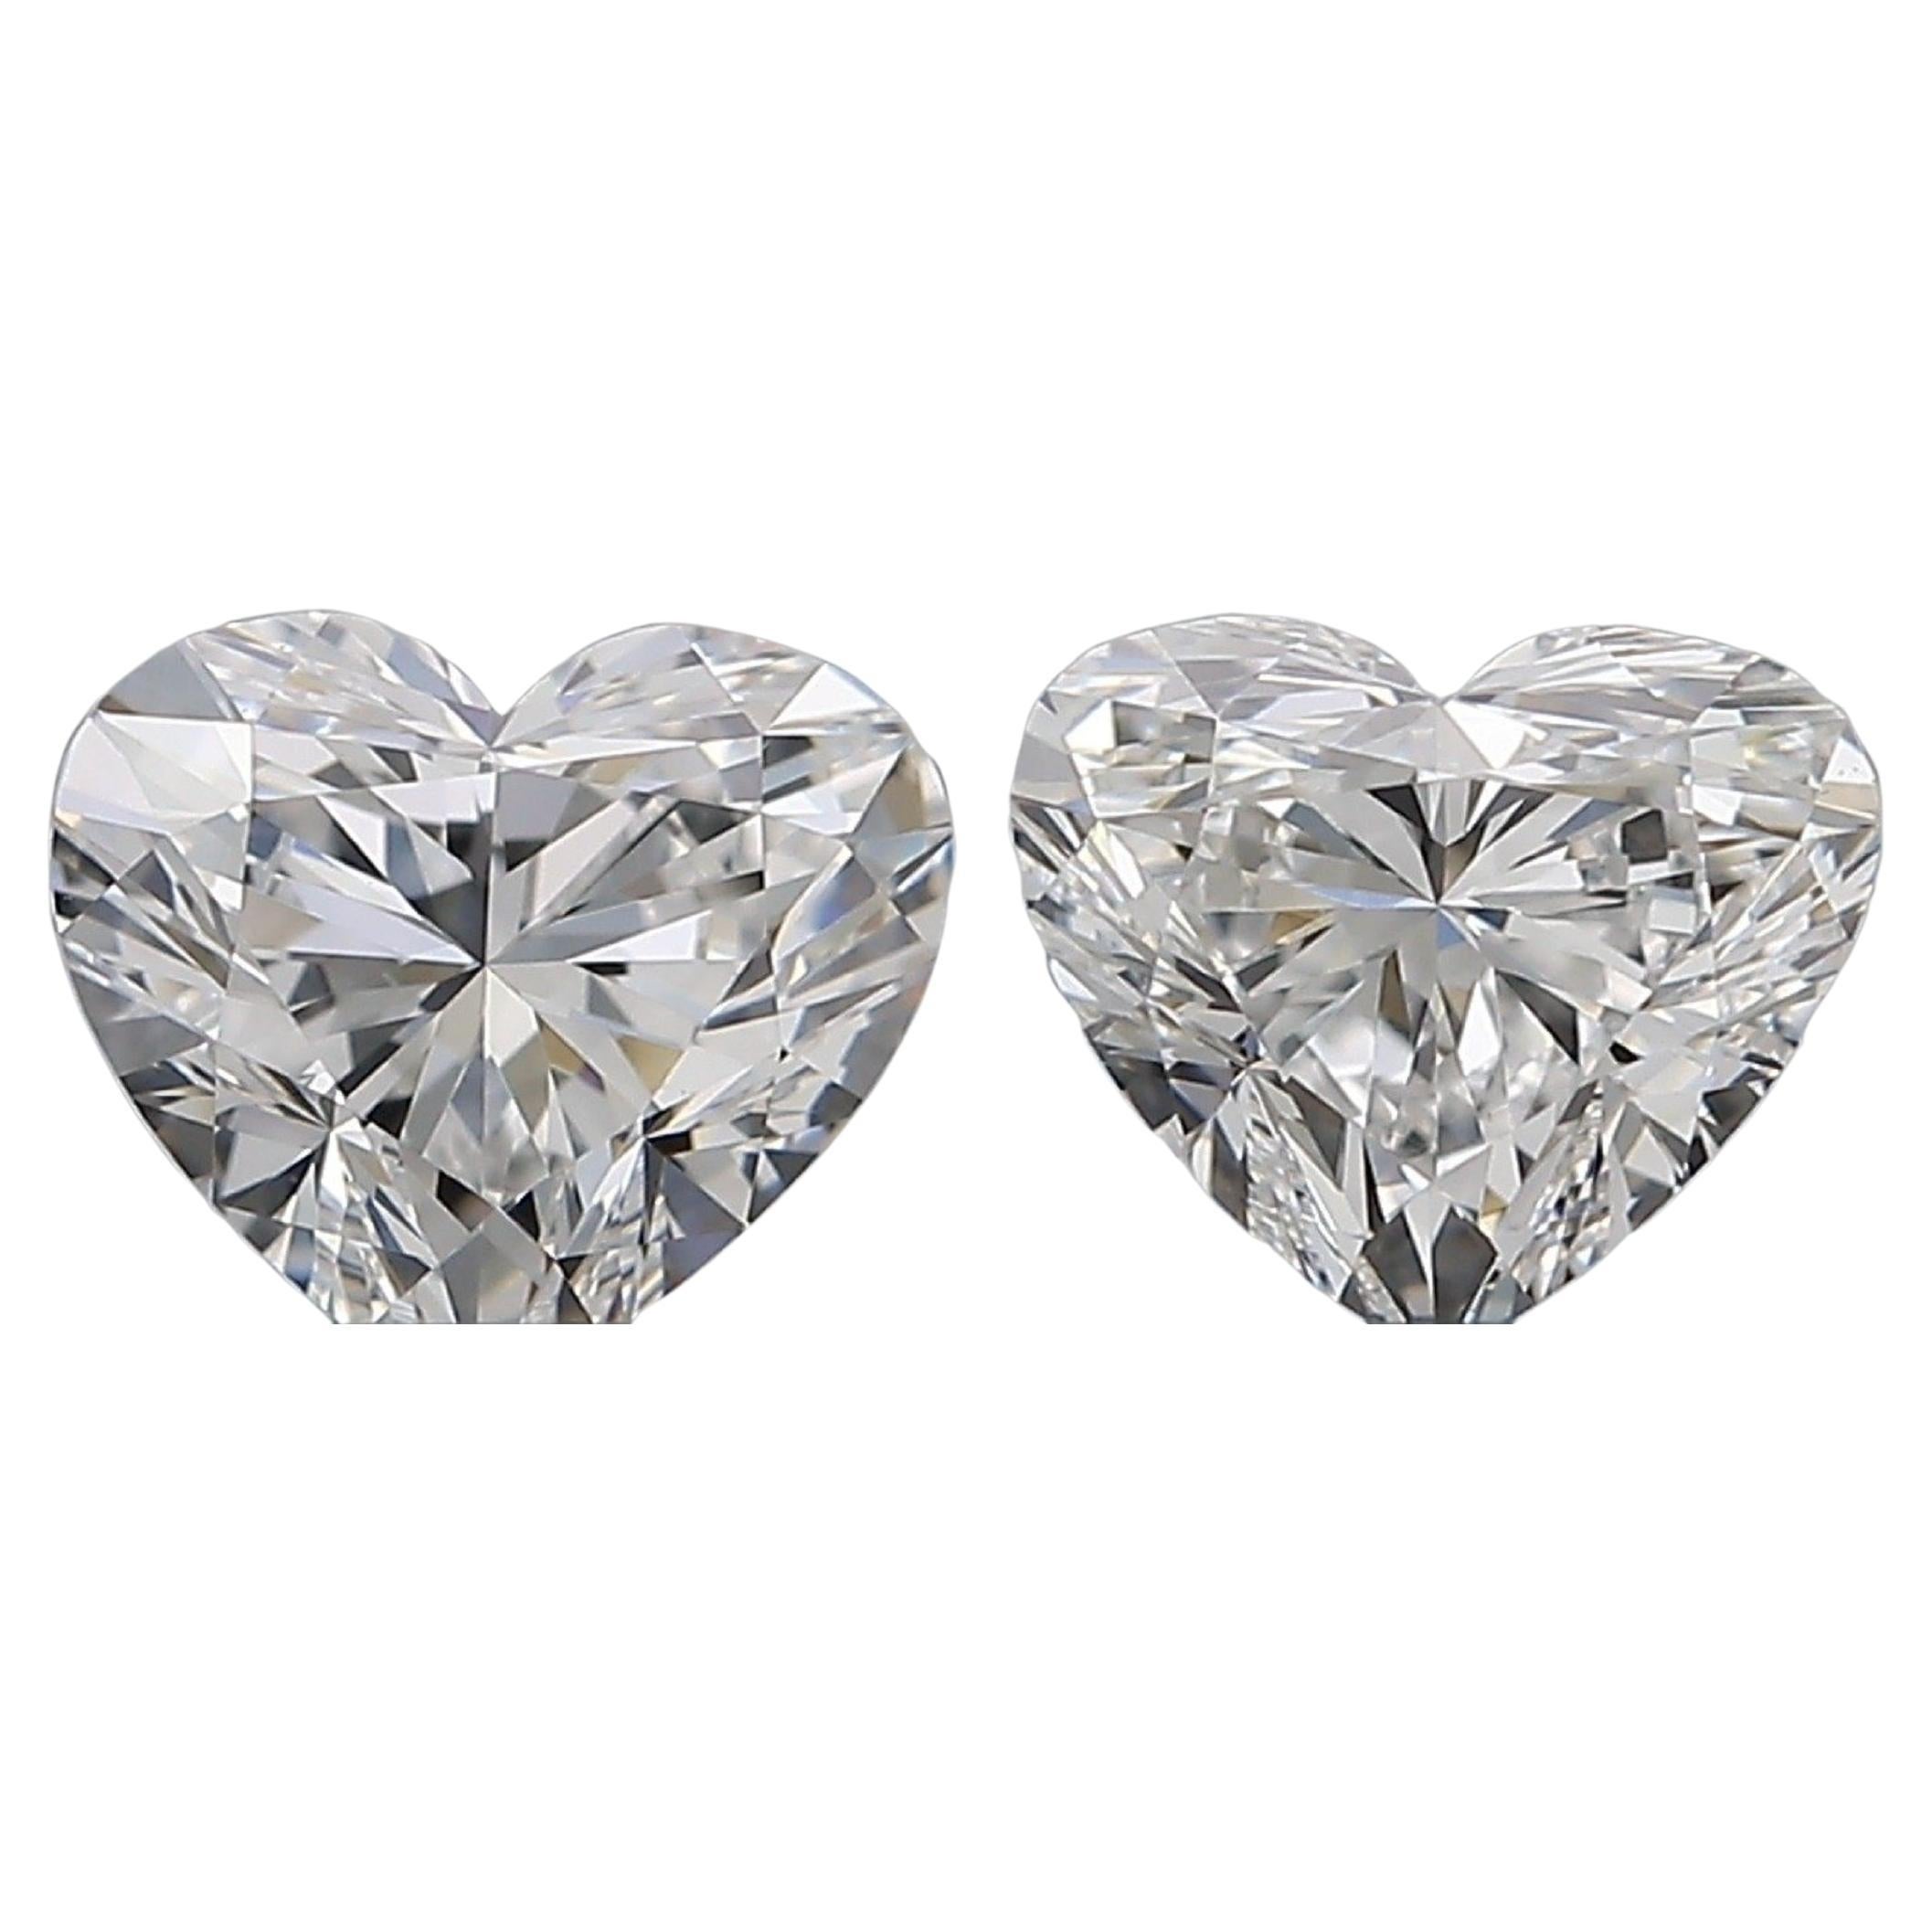 2 Pcs Natural Diamonds, 1.00 Ct, Heart, D 'Colourless' VS1, GIA Certificate